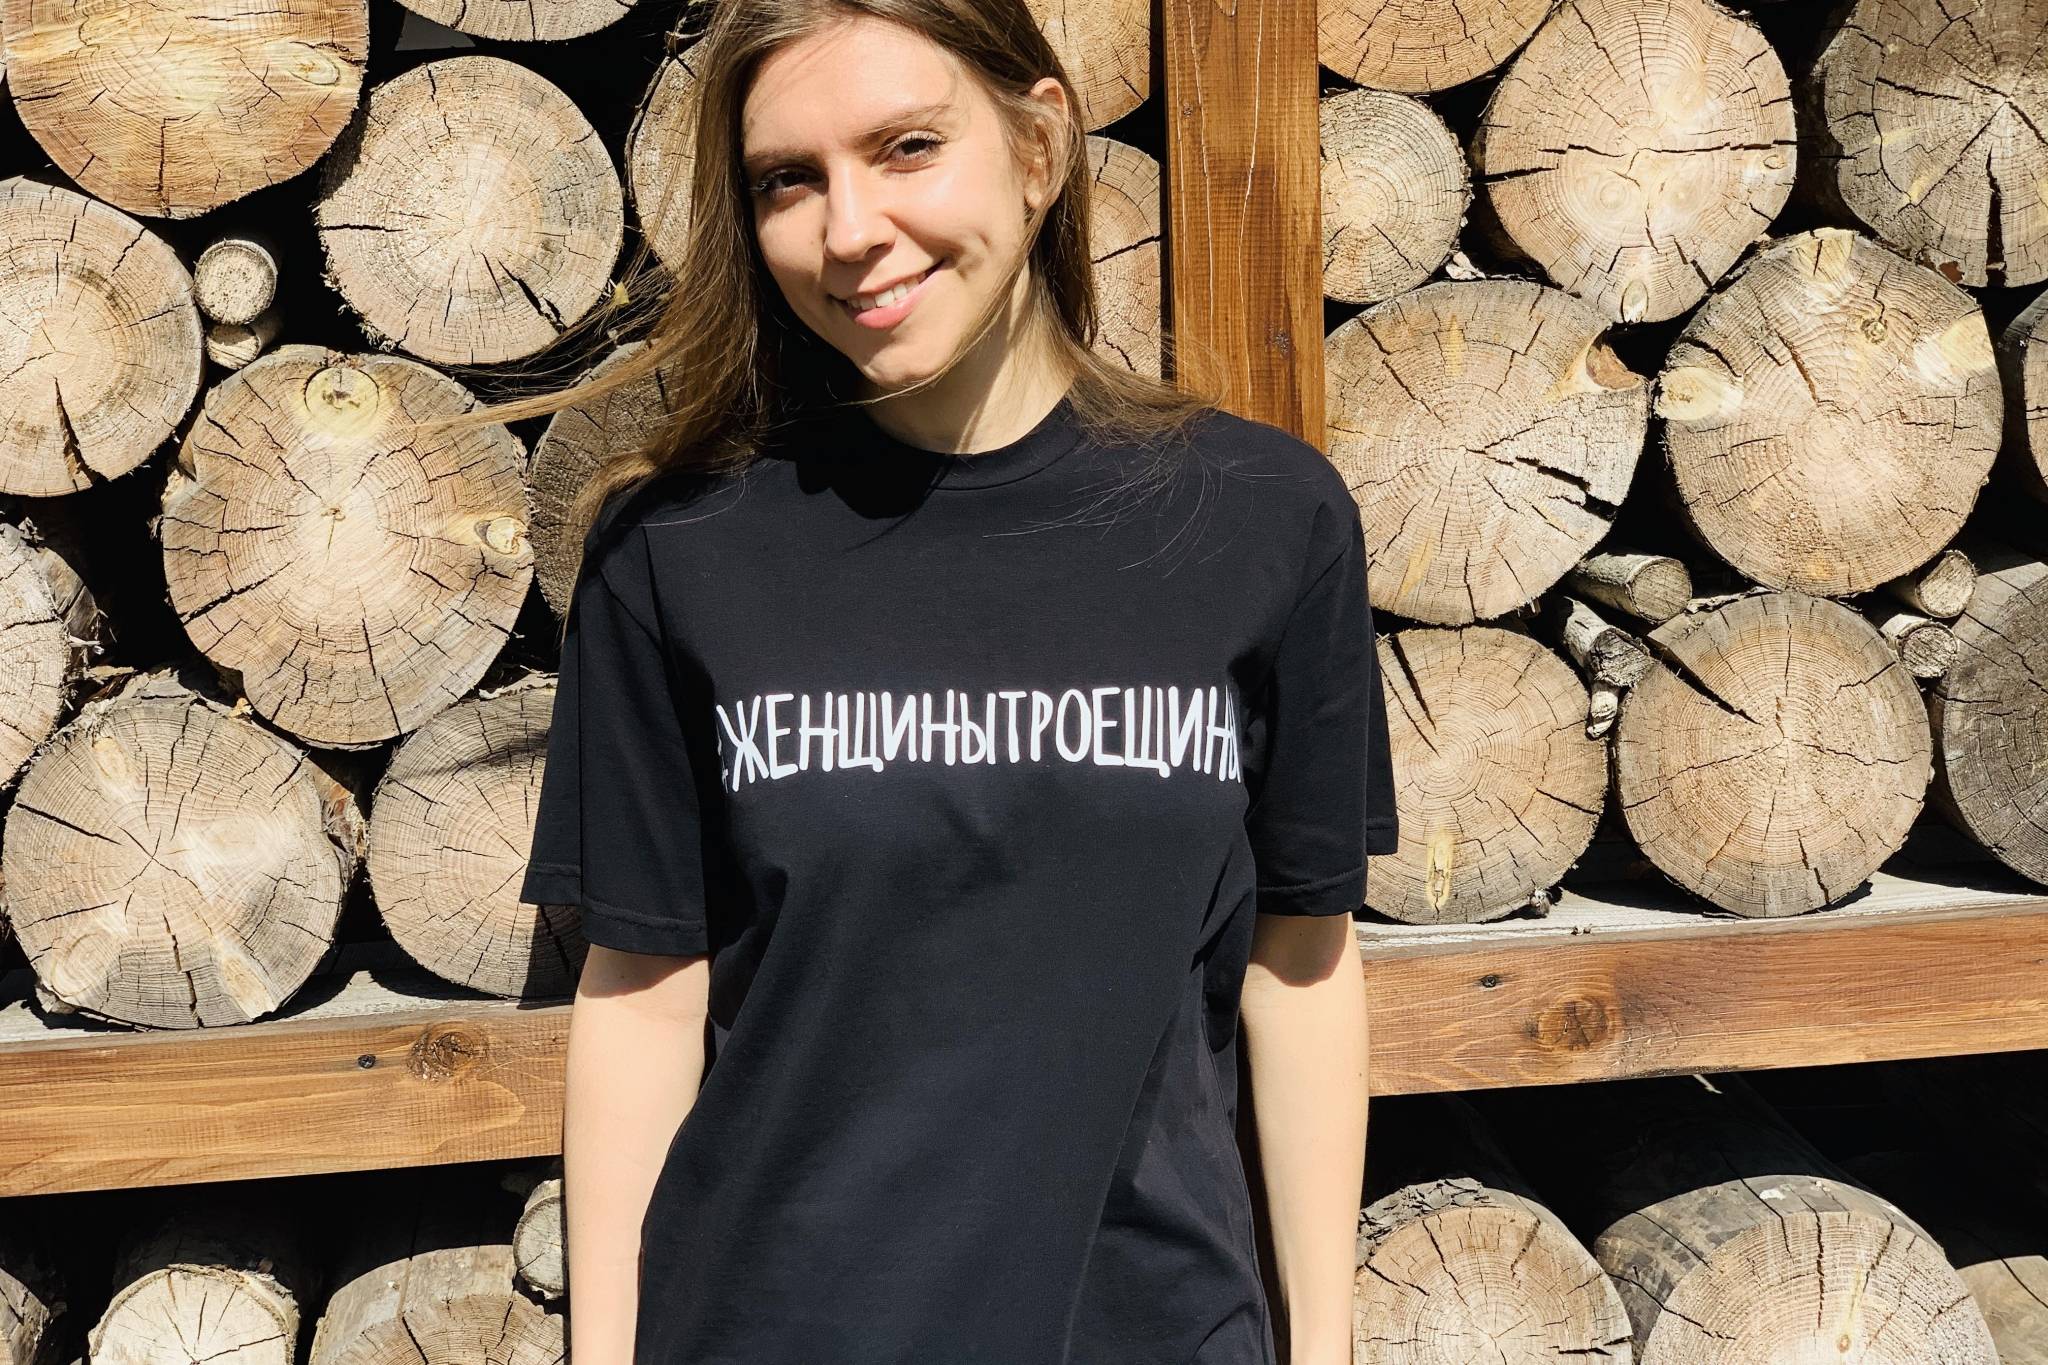 Black #Troieshchyna’sWomen T-Shirt